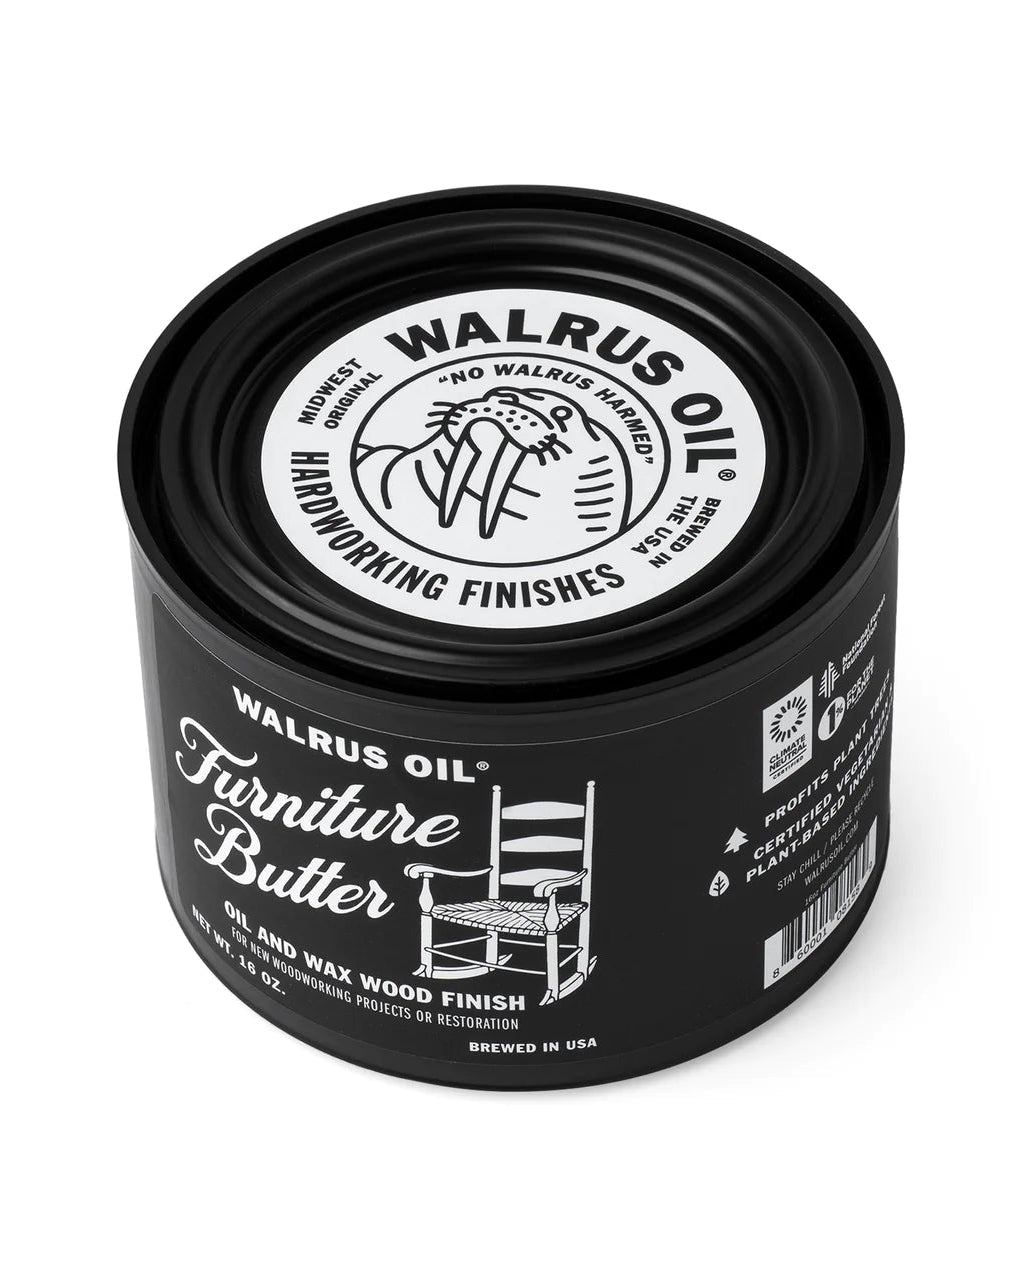 Walrus Oil Furniture Butter 16oz | Finish | Hamilton Lee Supply